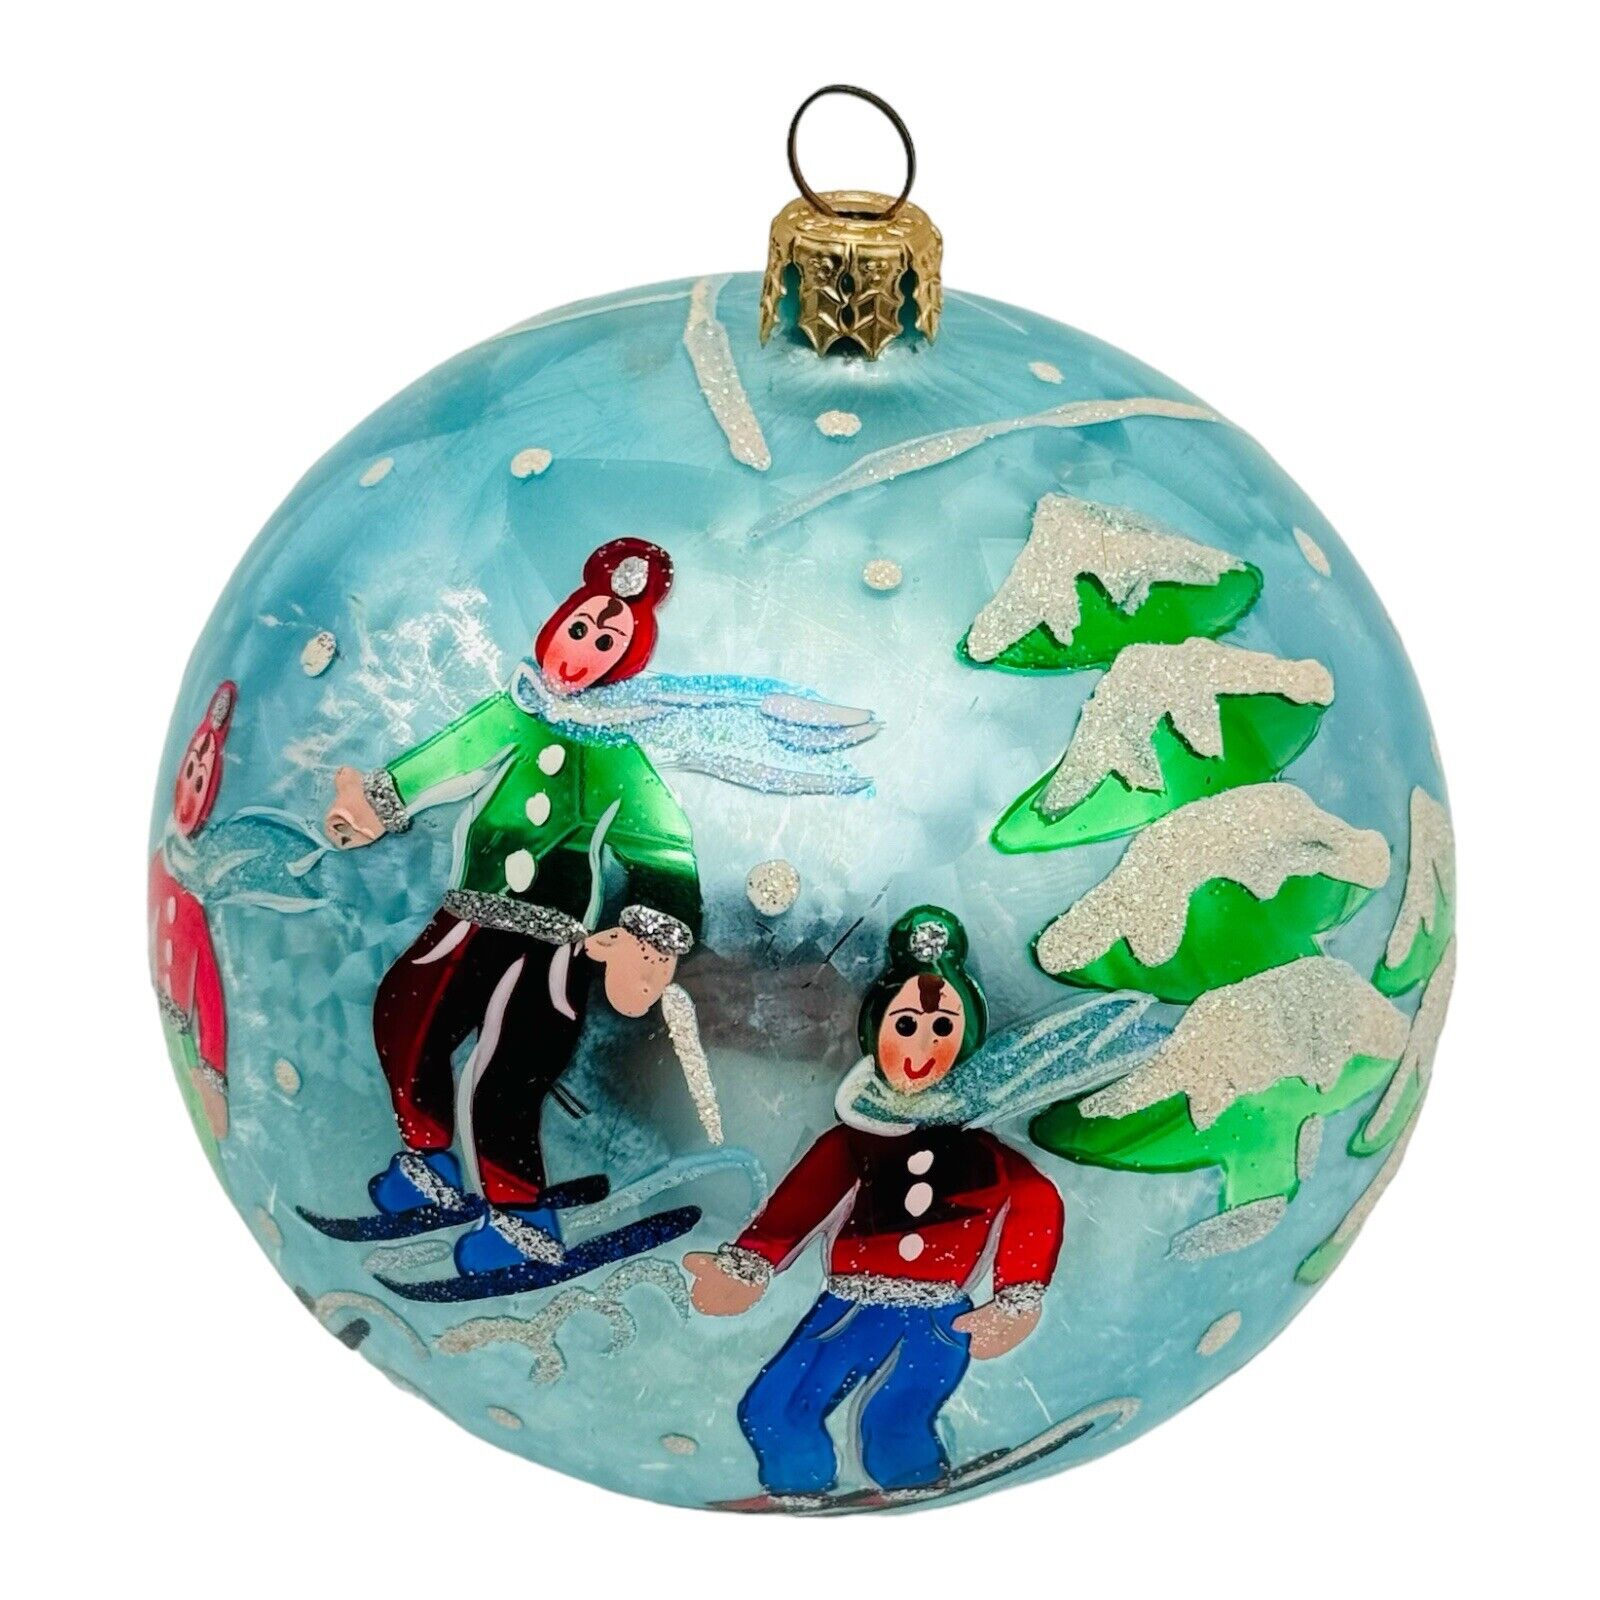 Christopher Radko St. Moritz Holiday Glass Christmas Ornament 4” 2002